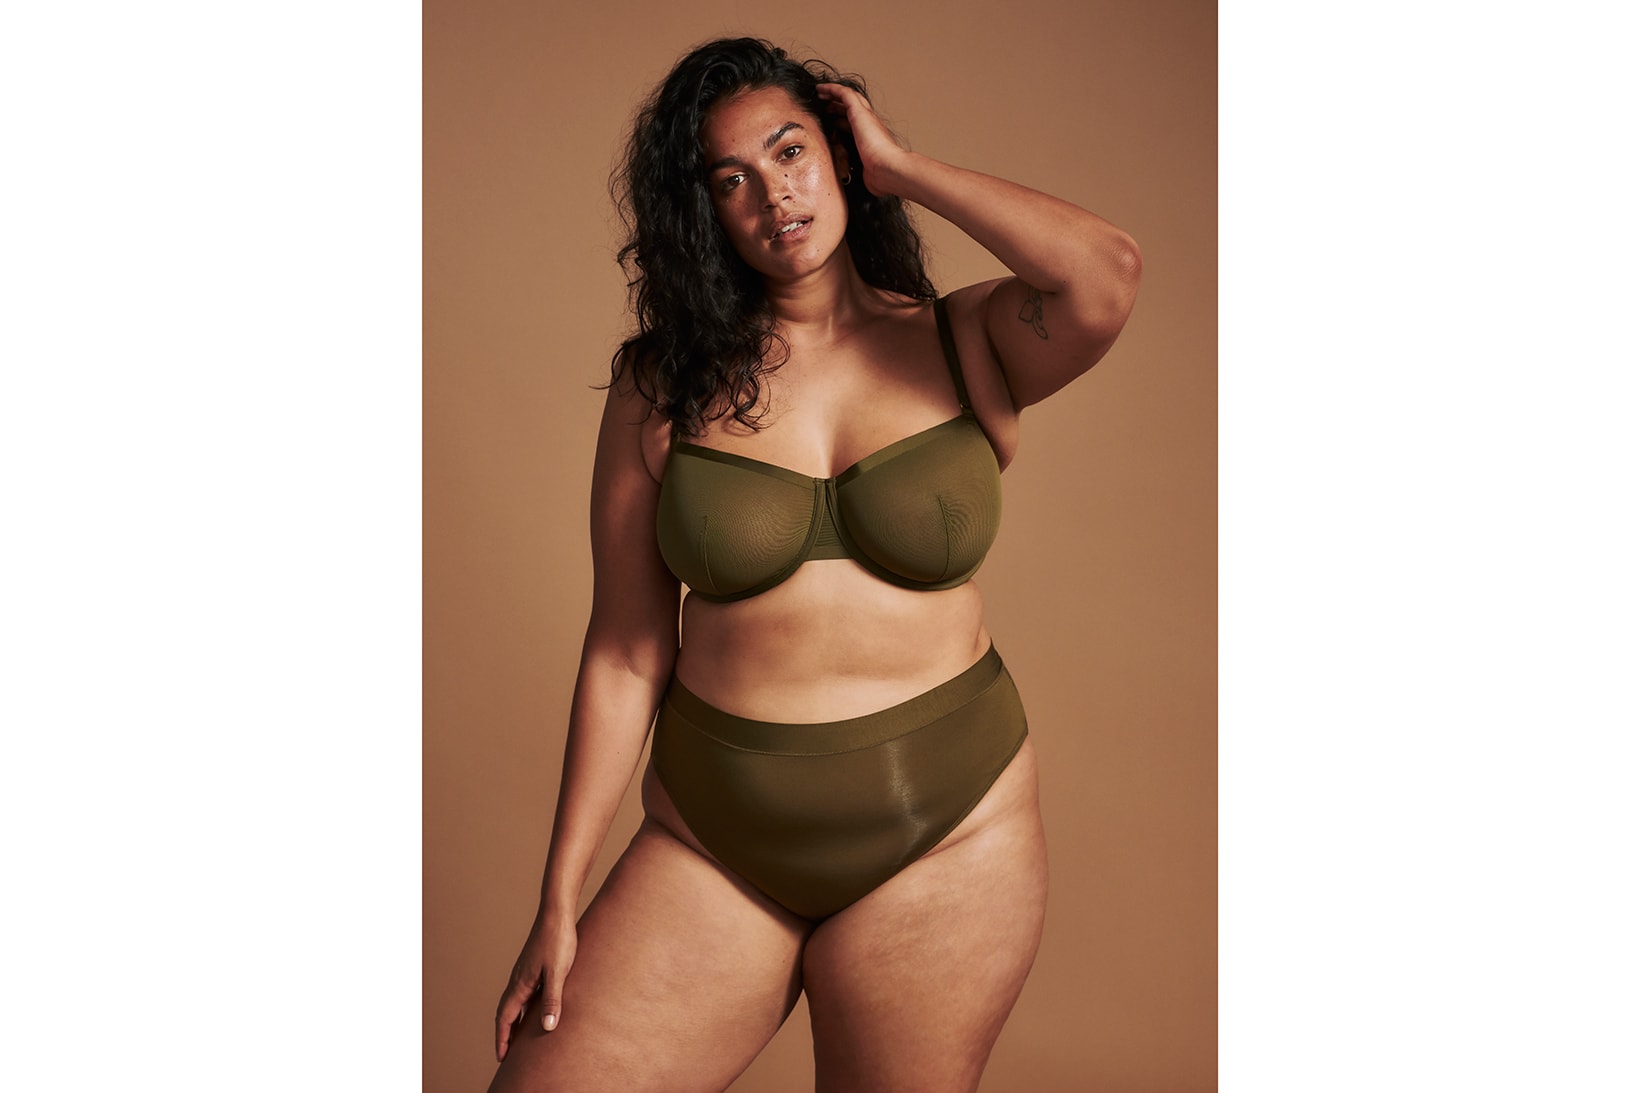 cuup lingerie bras underwear moss green bras body positive inclusive sheer mesh thongs highwaist